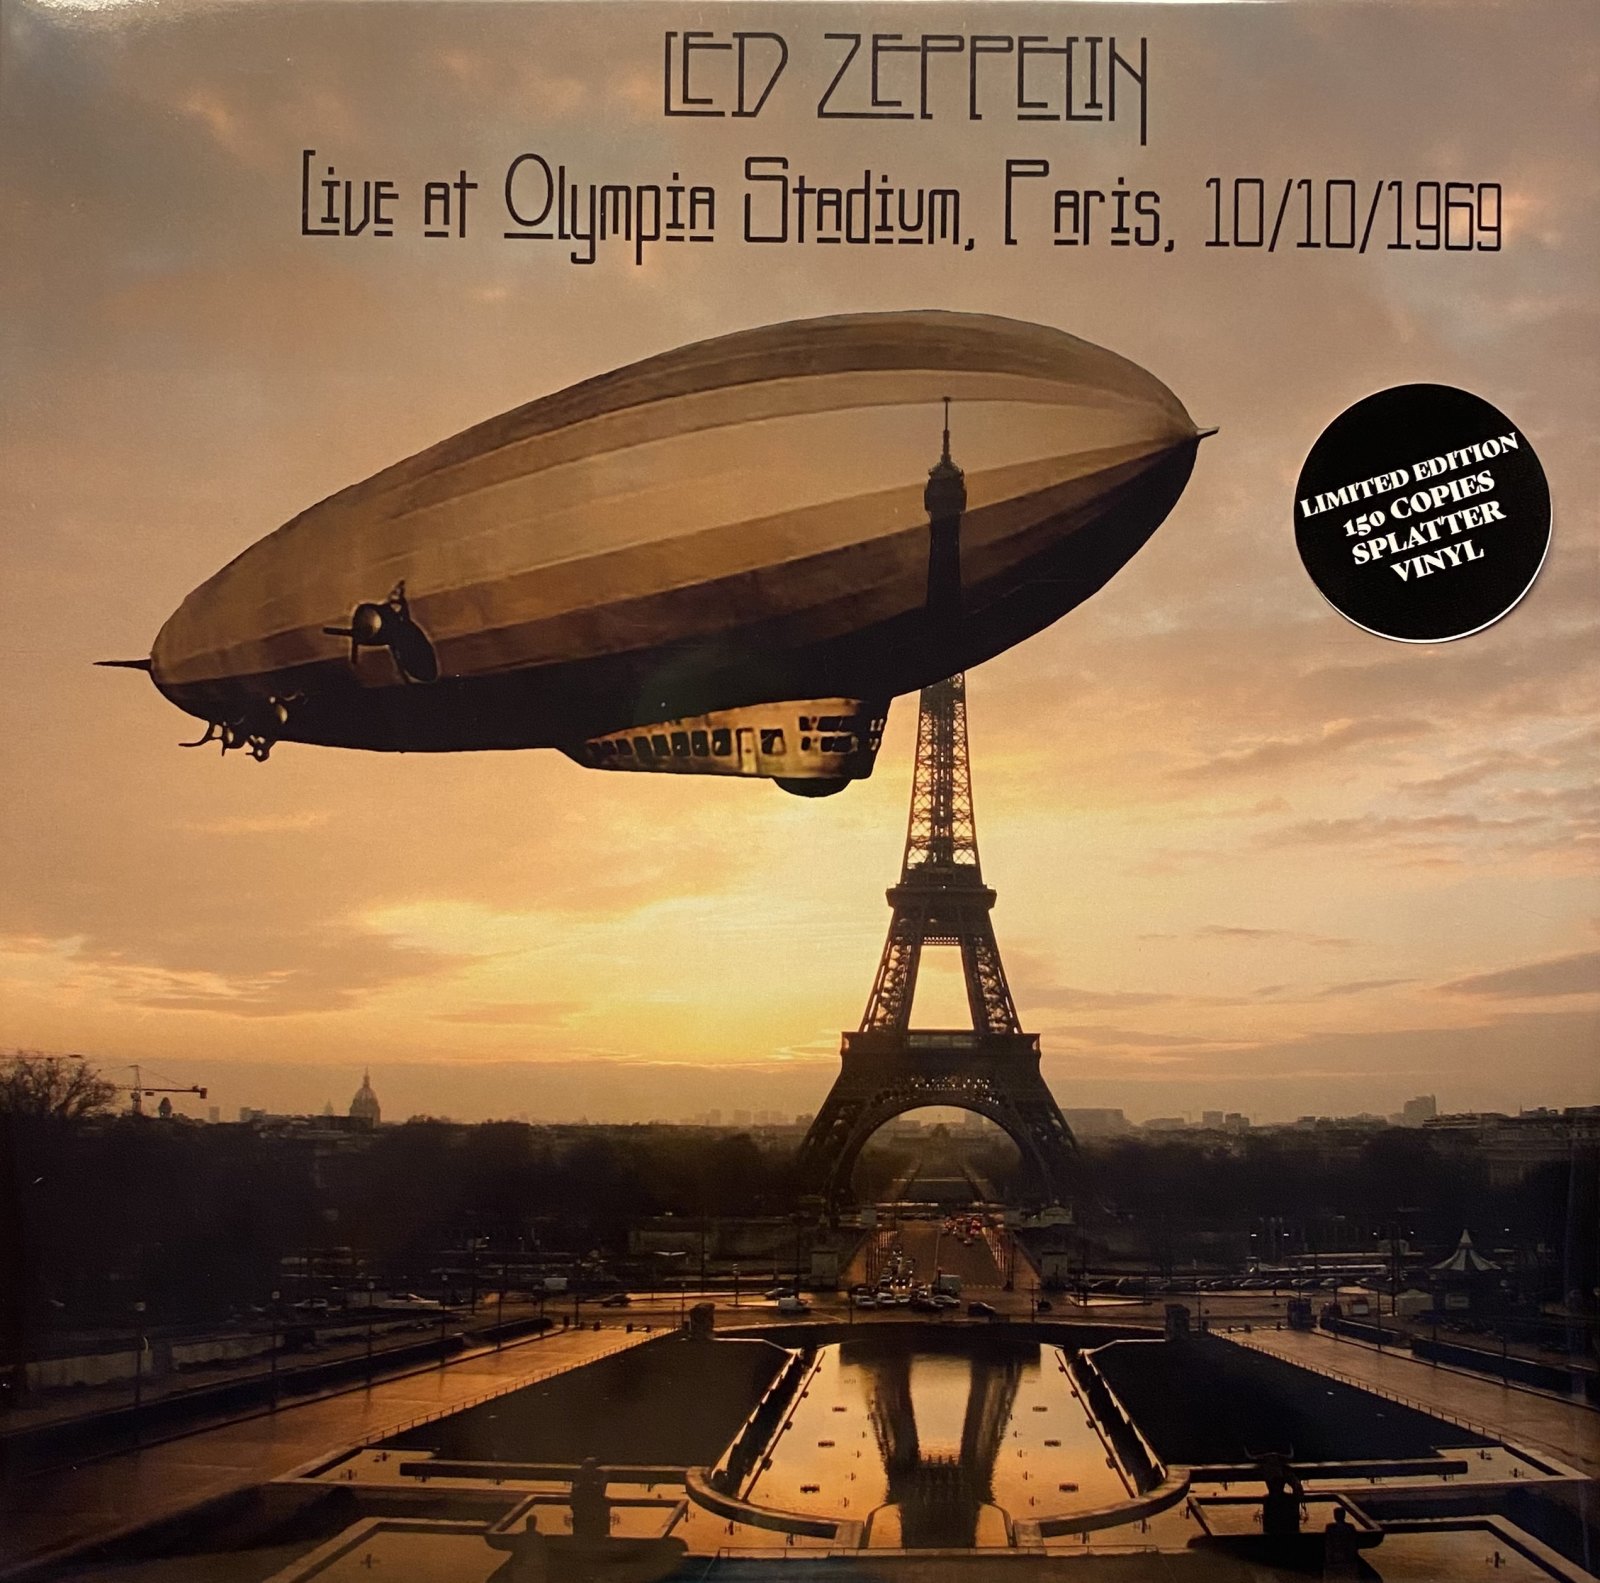 LED ZEPPELIN - LIVE AT L'OLYMPIA STADIUM, PARIS, 10/10/1969 - SPLATTER VINYL